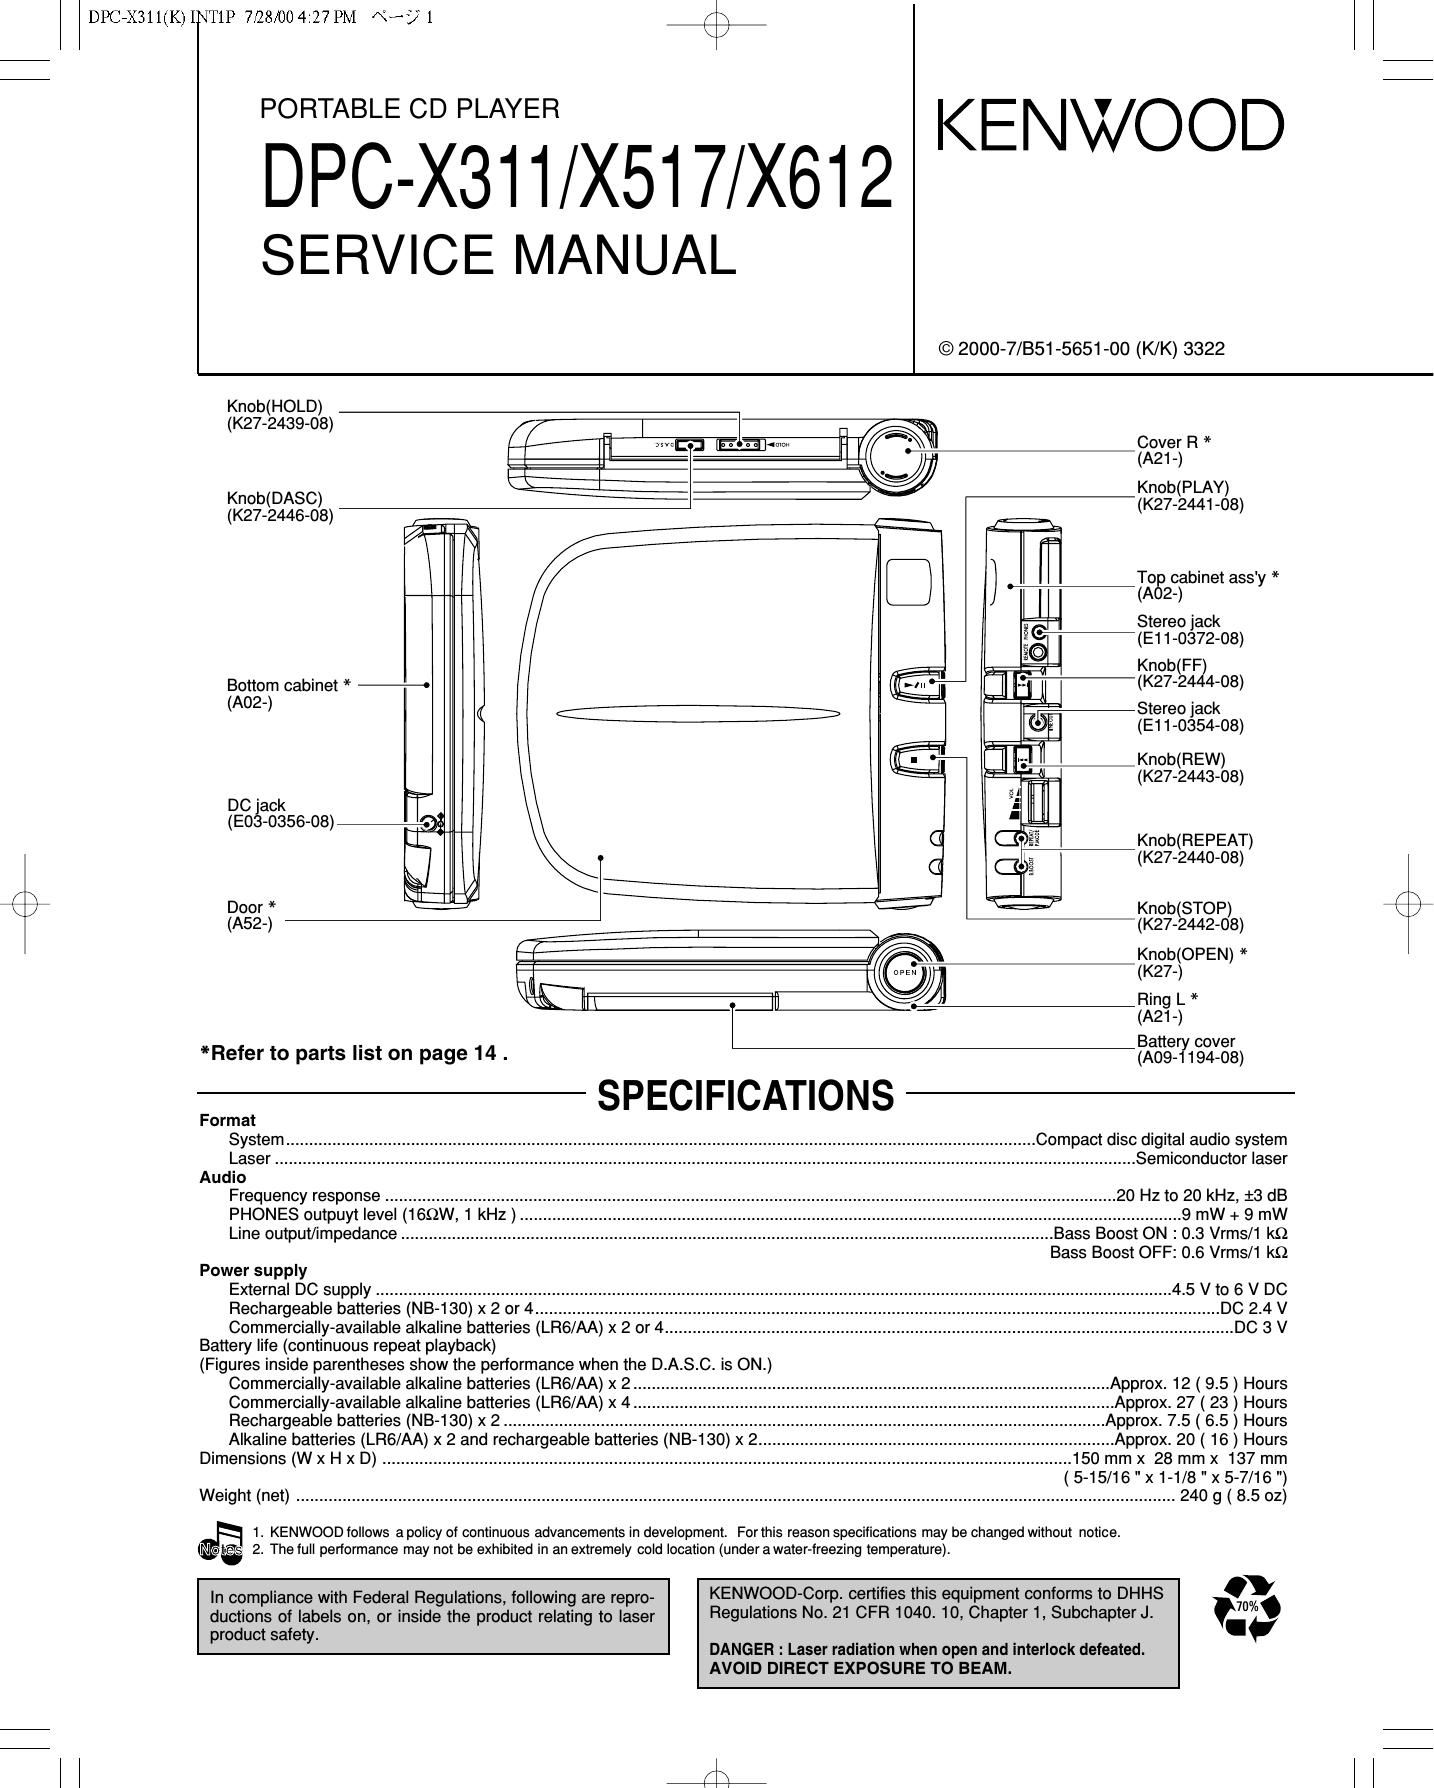 Kenwood DPCX 311 Service Manual